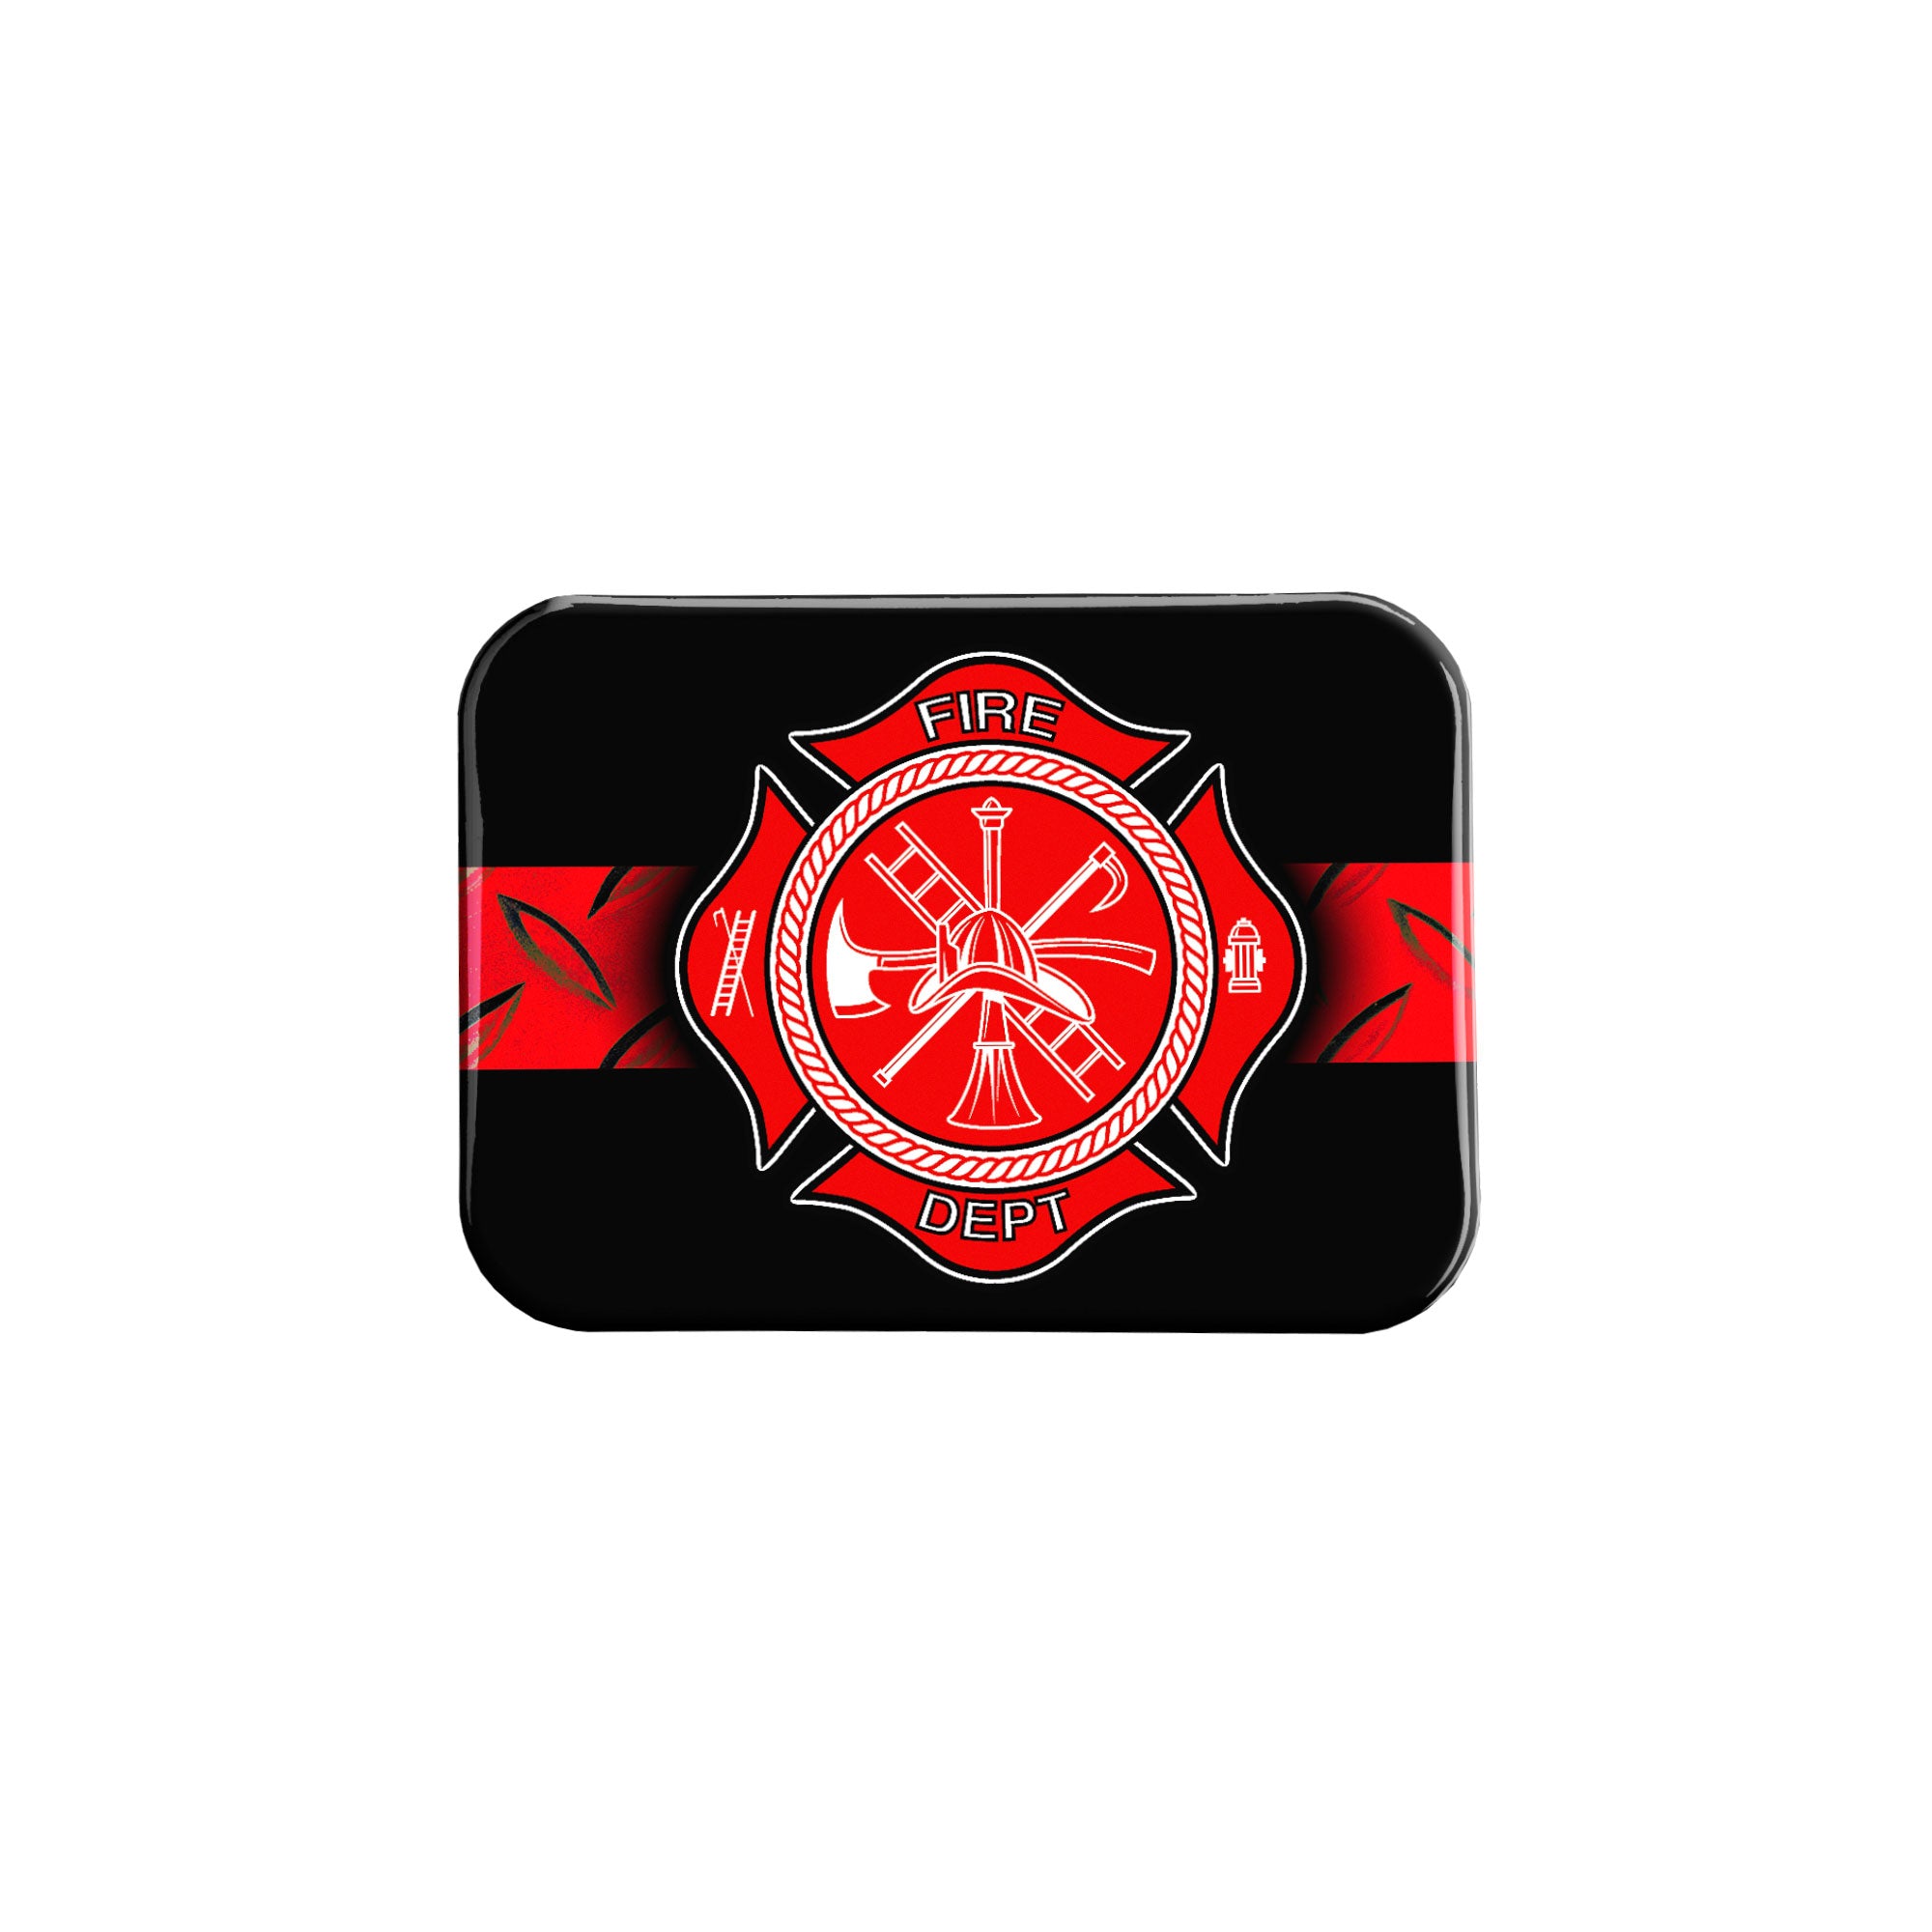 "Firefighter Thin Red Line Diamond" - 2.5" X 3.5" Rectangle Fridge Magnets